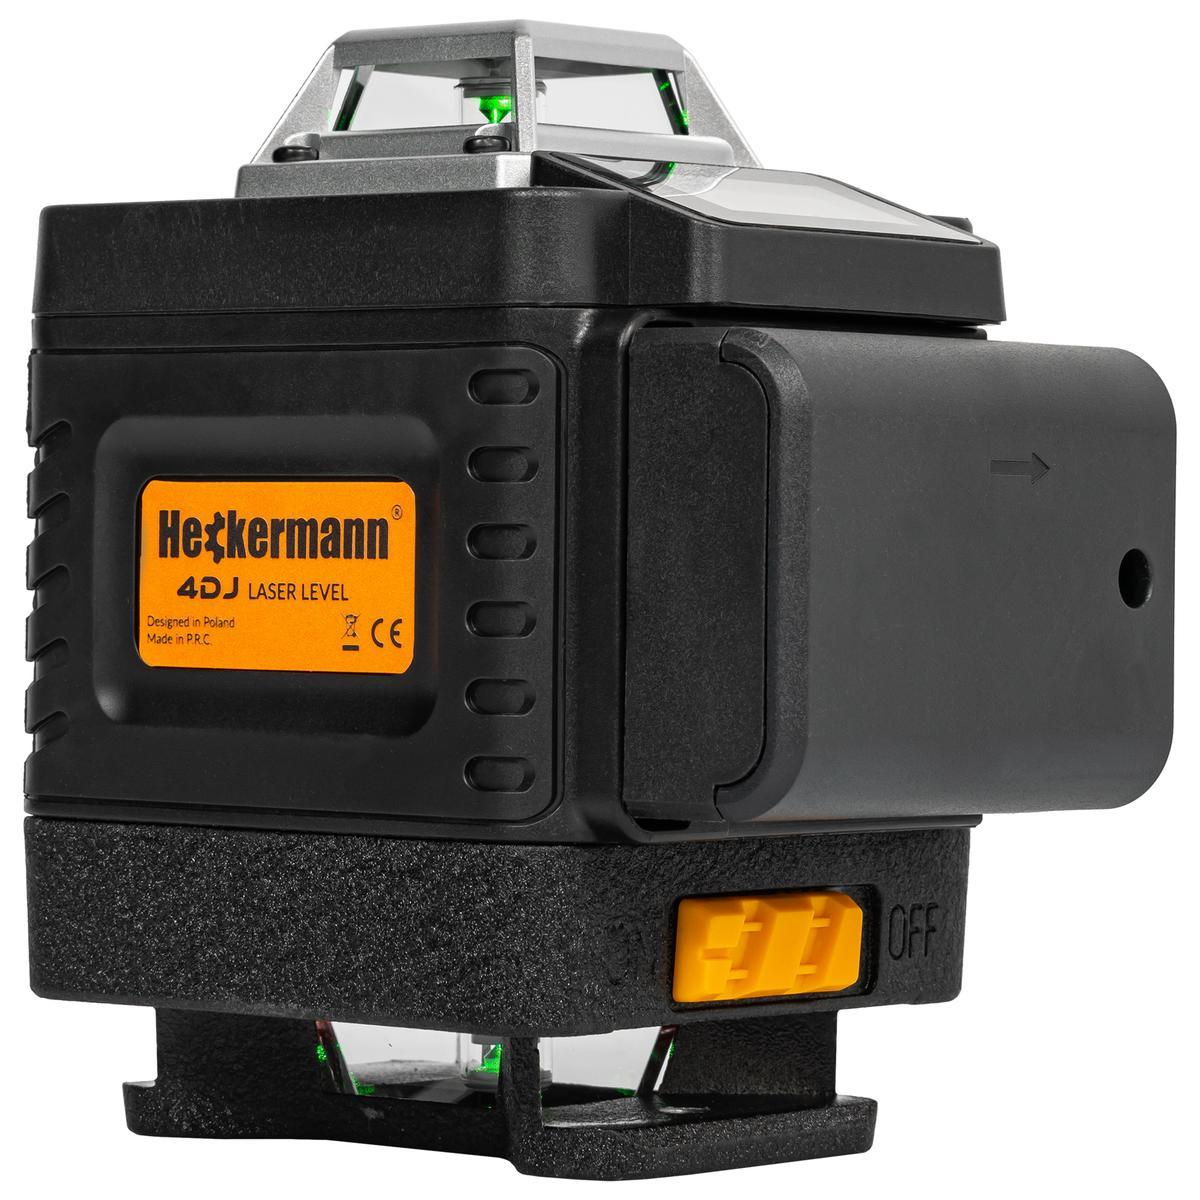 Poziomica laserowa Heckermann 16 linii 4DJ LCD Laser Krzyżowy 2 Full Screen